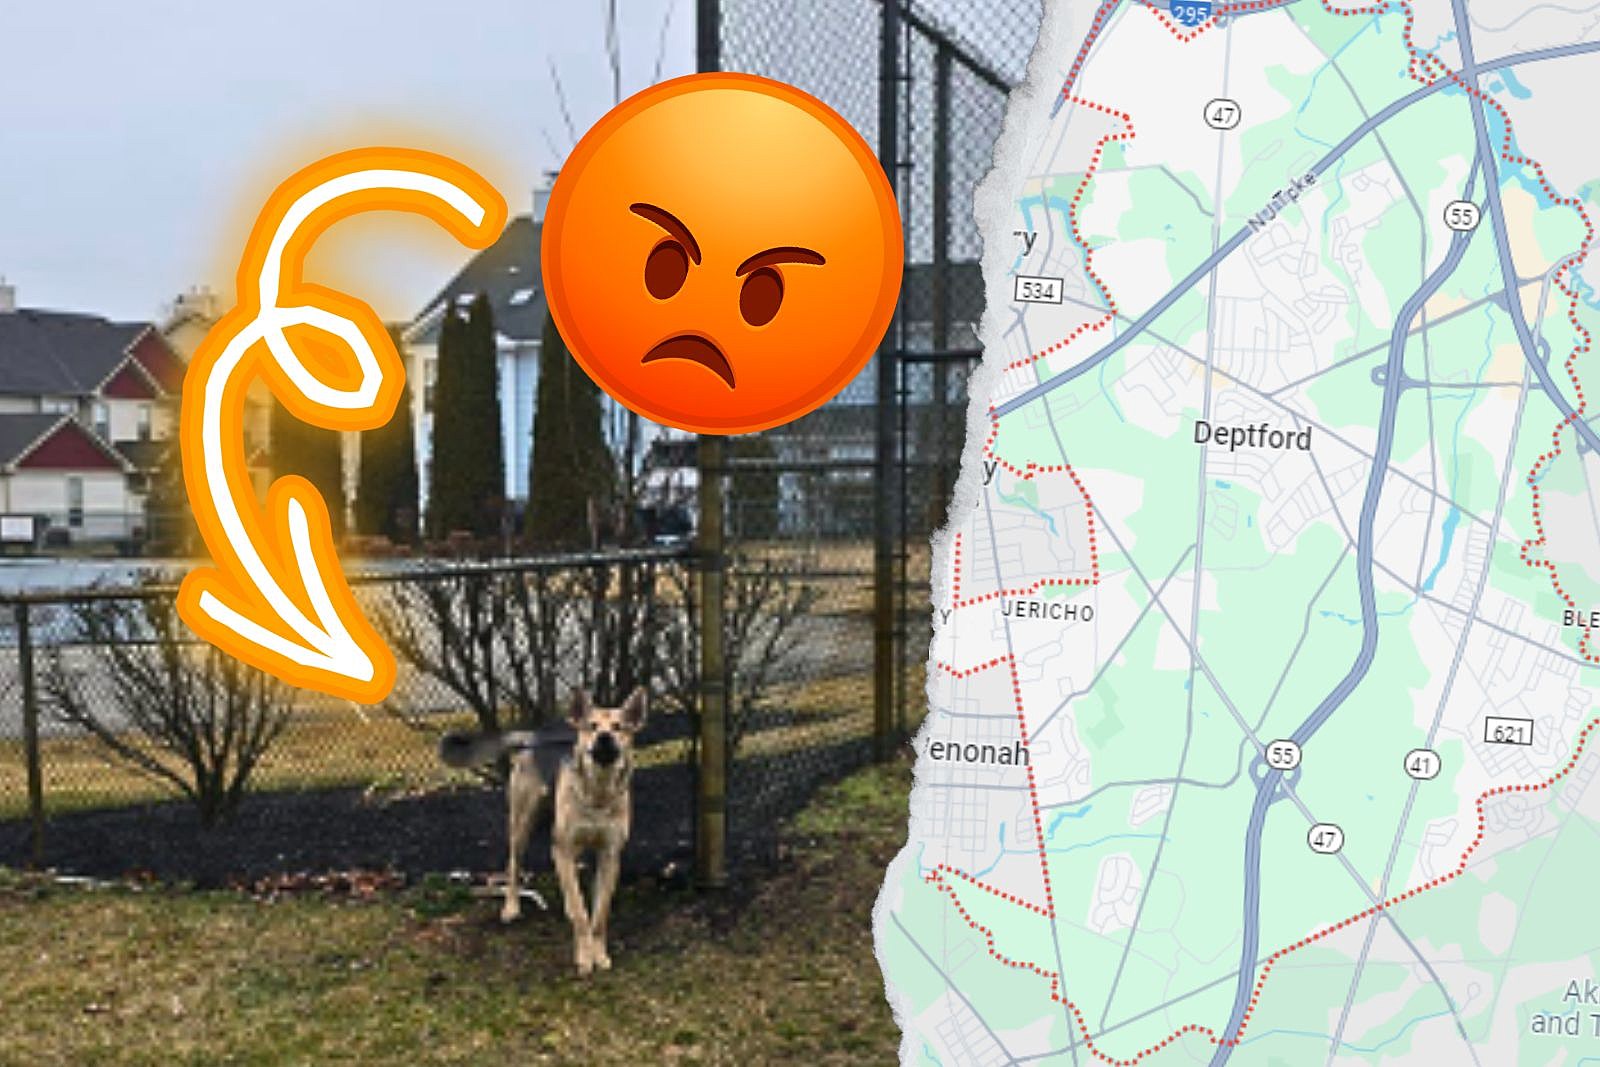 German Shepherd Dumped, Found Tied To Fence In Deptford, NJ